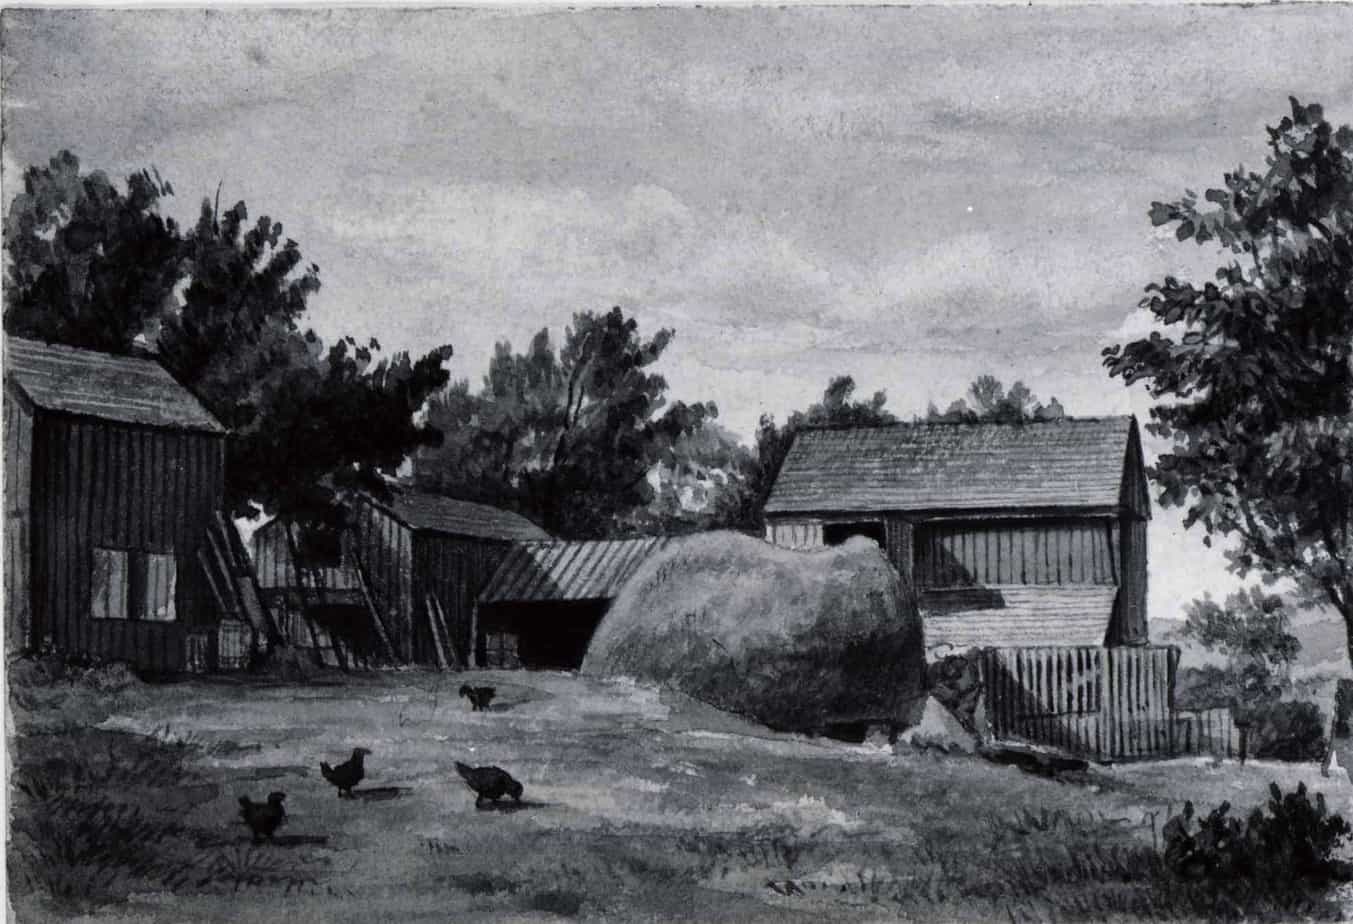 Farm Scene American Artist (1851–1899) perhaps built in a similar era to the farmhouse in Proulx's short story